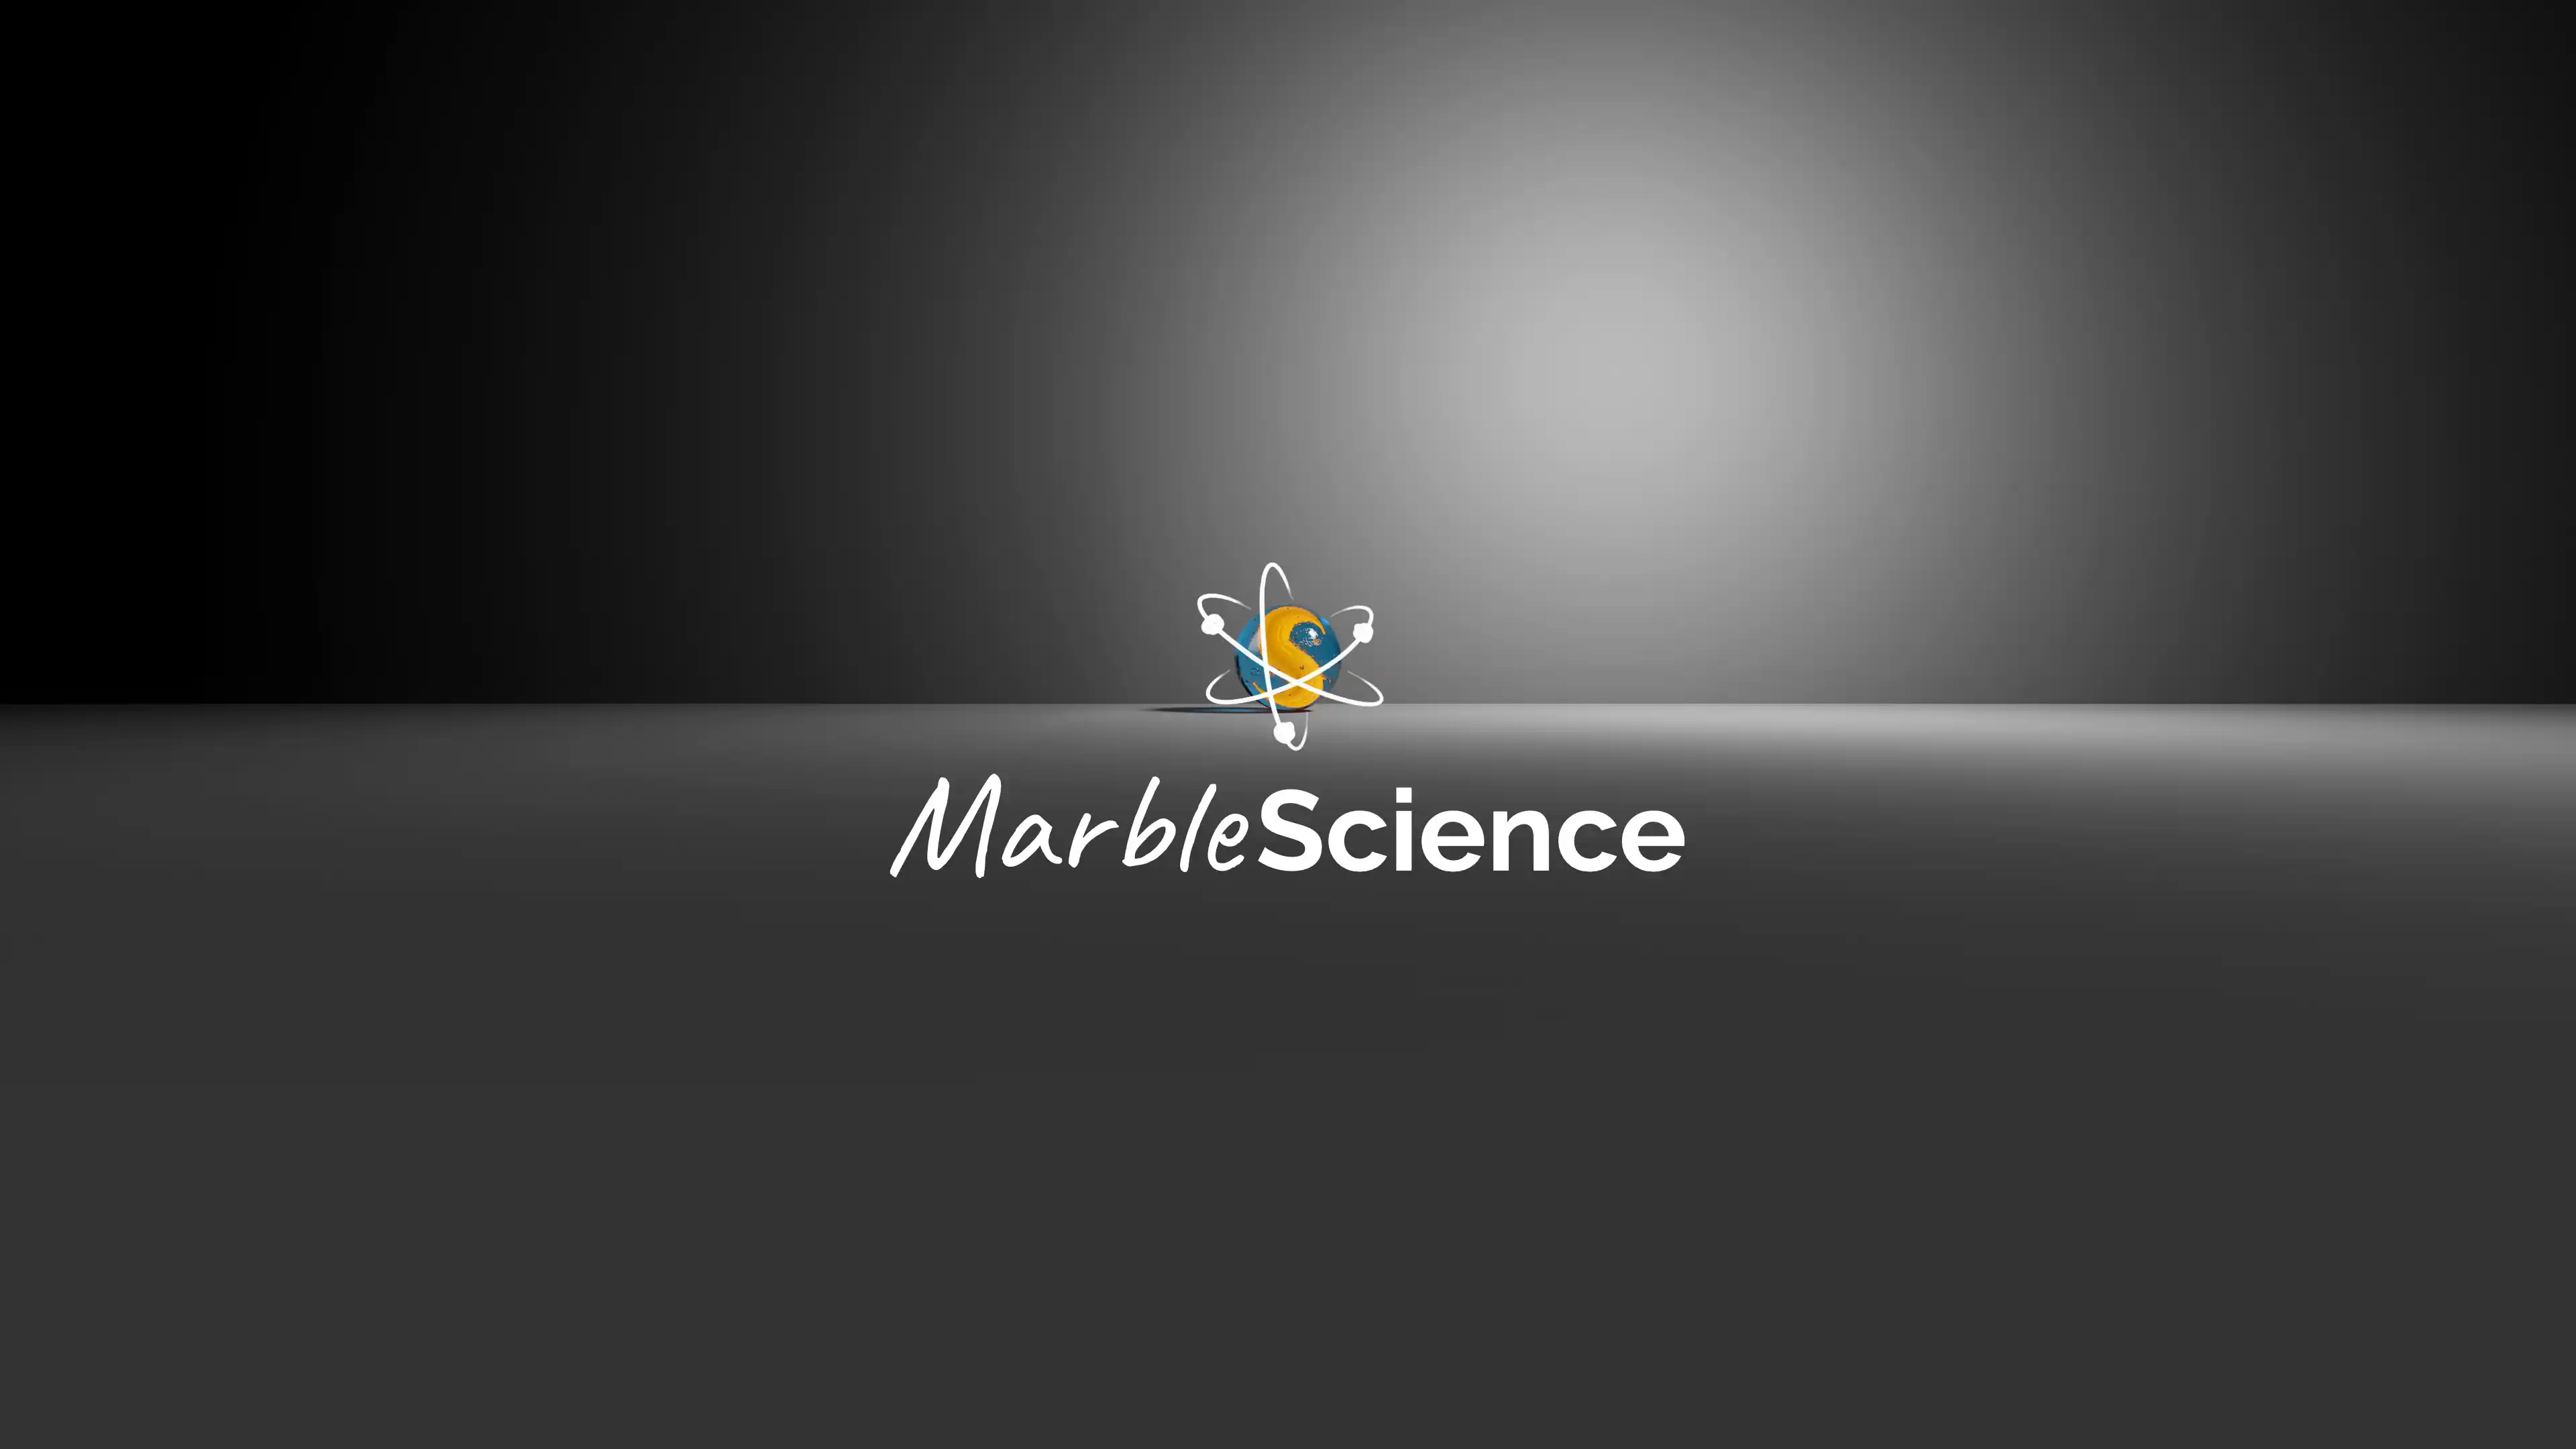 MarbleScience banner